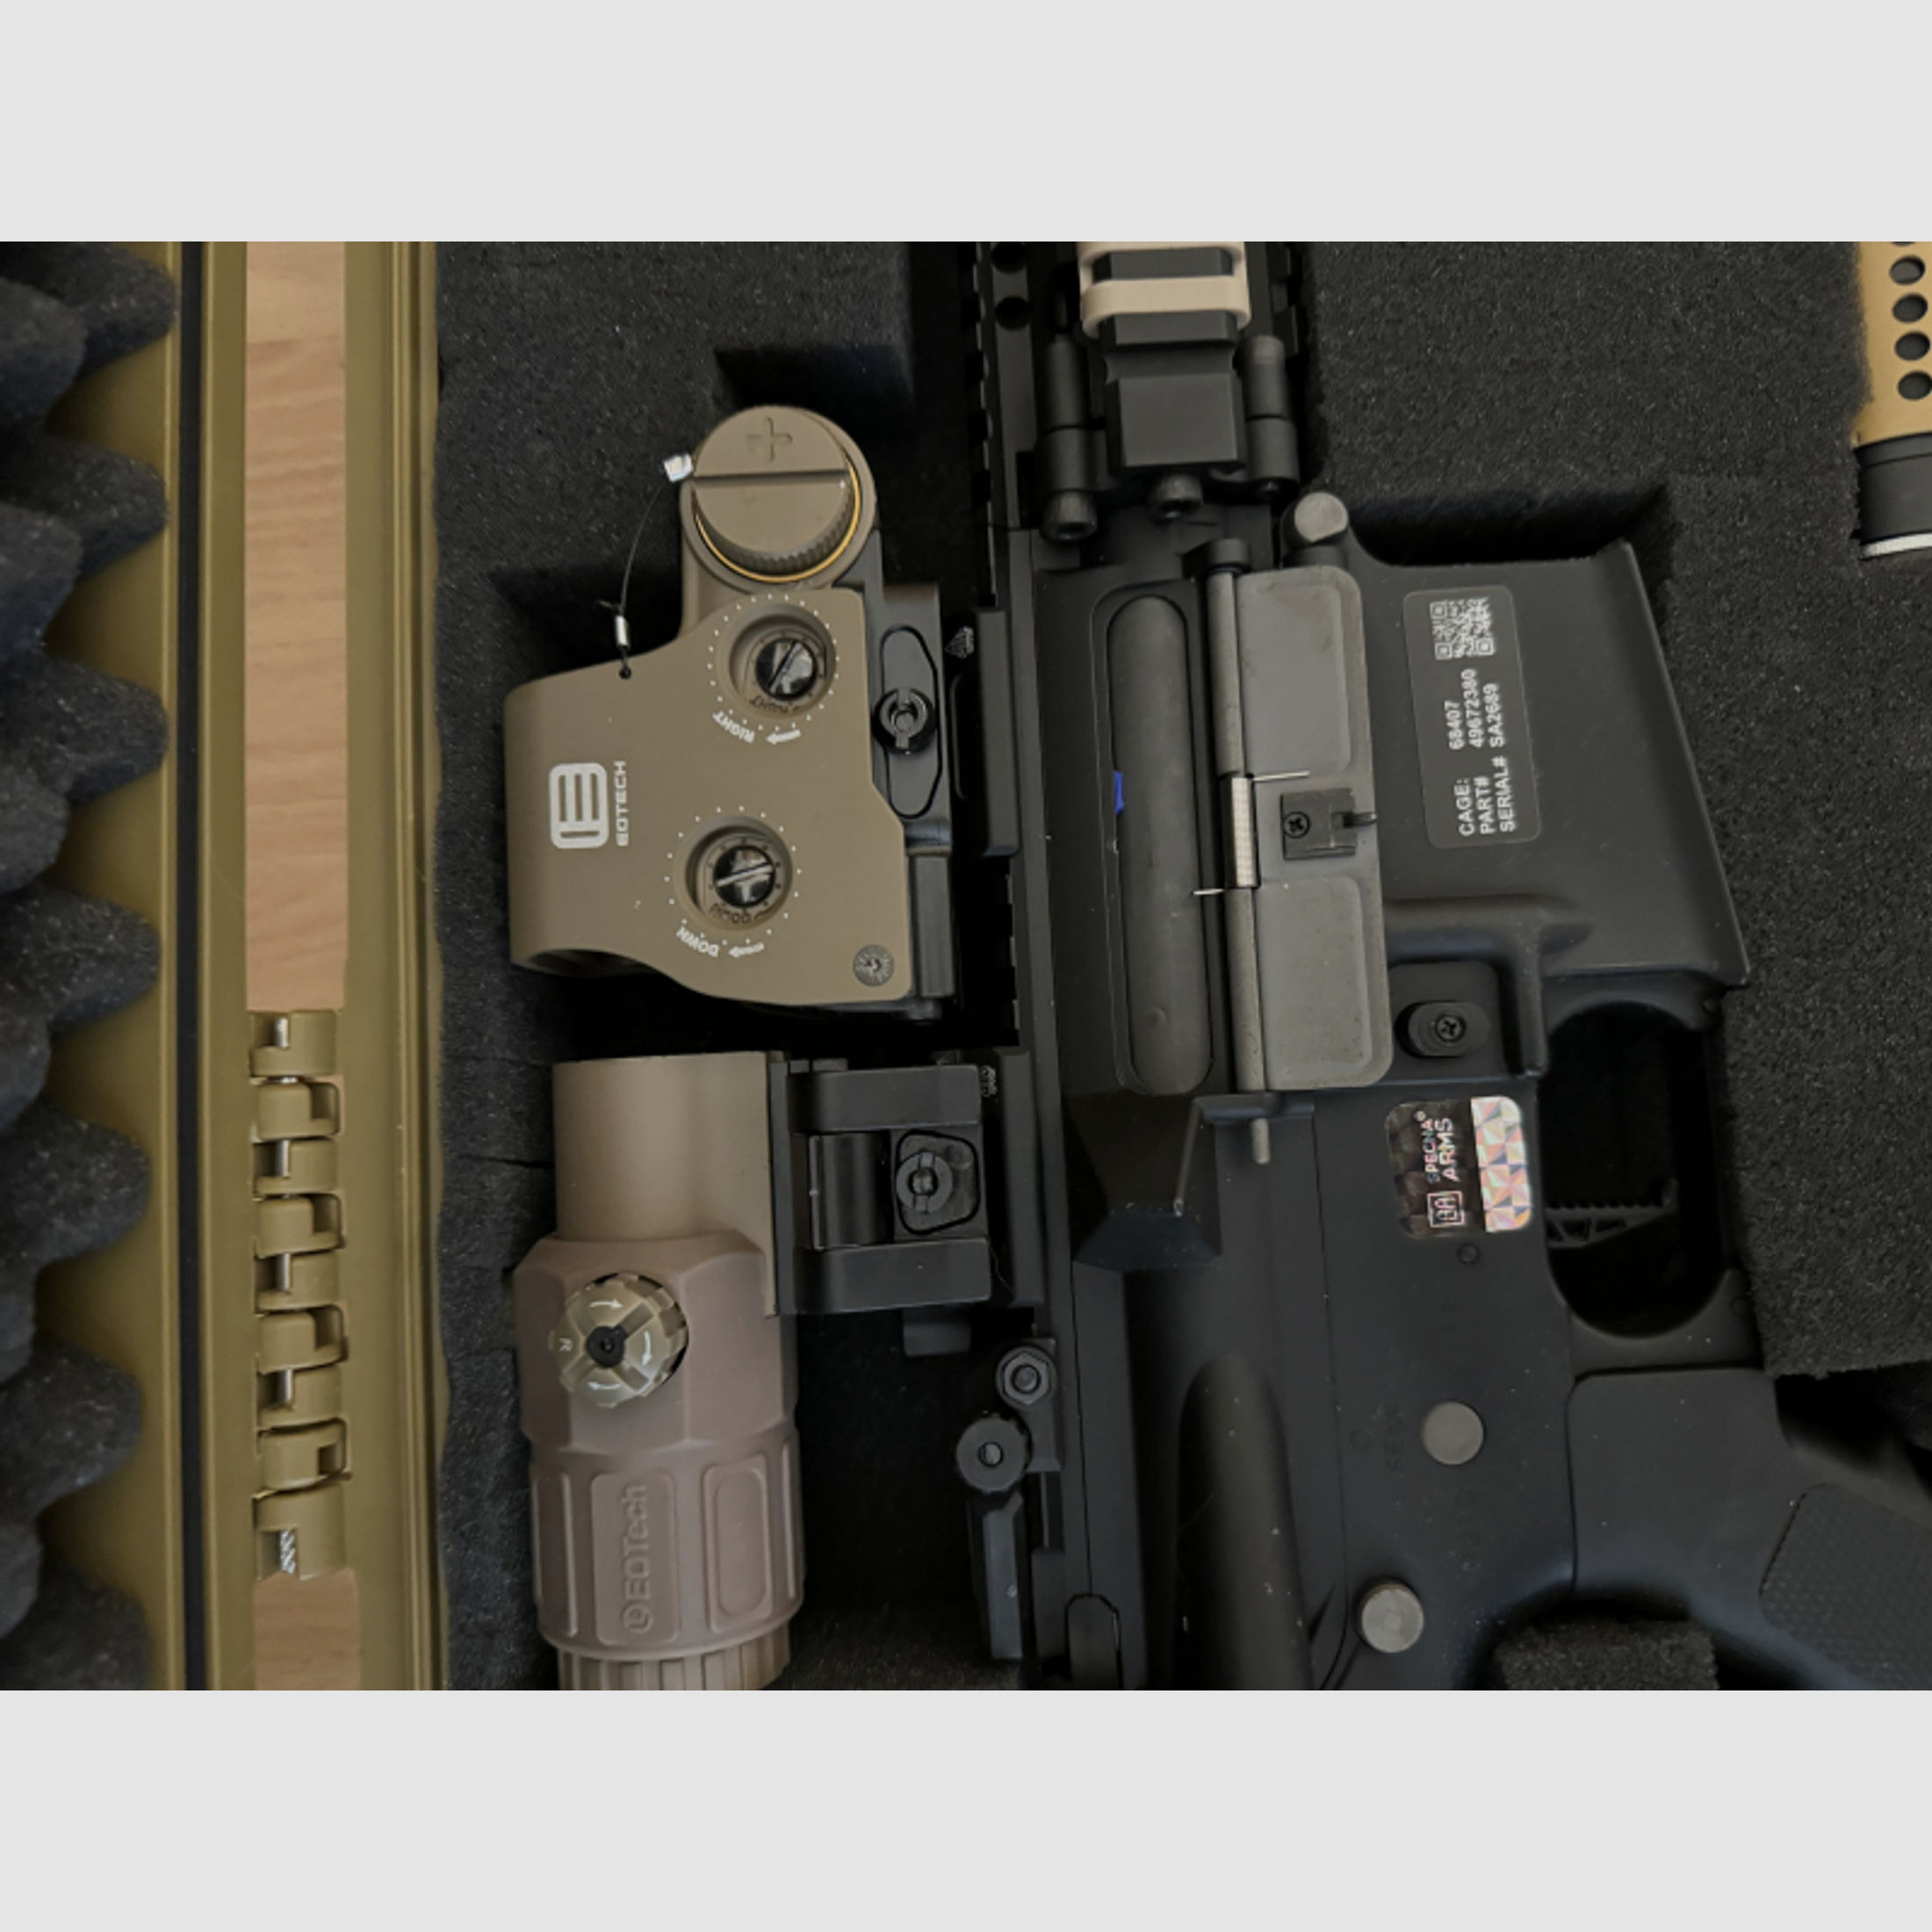 Specna Arms + Glock 19X komplettset